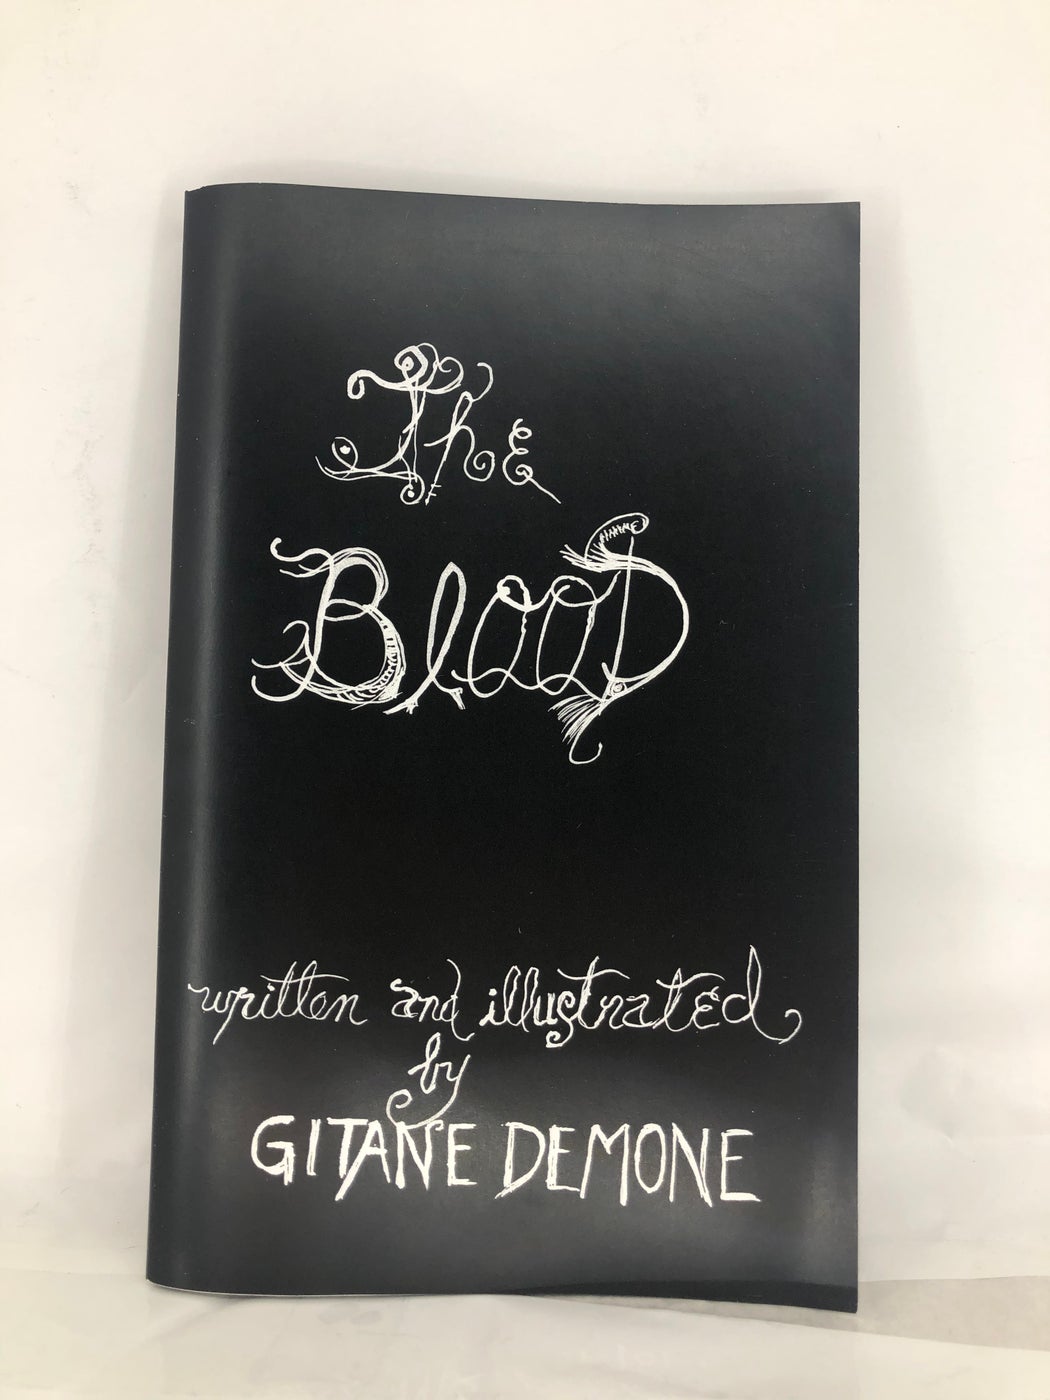 Gitane Demone "The Blood" Zine